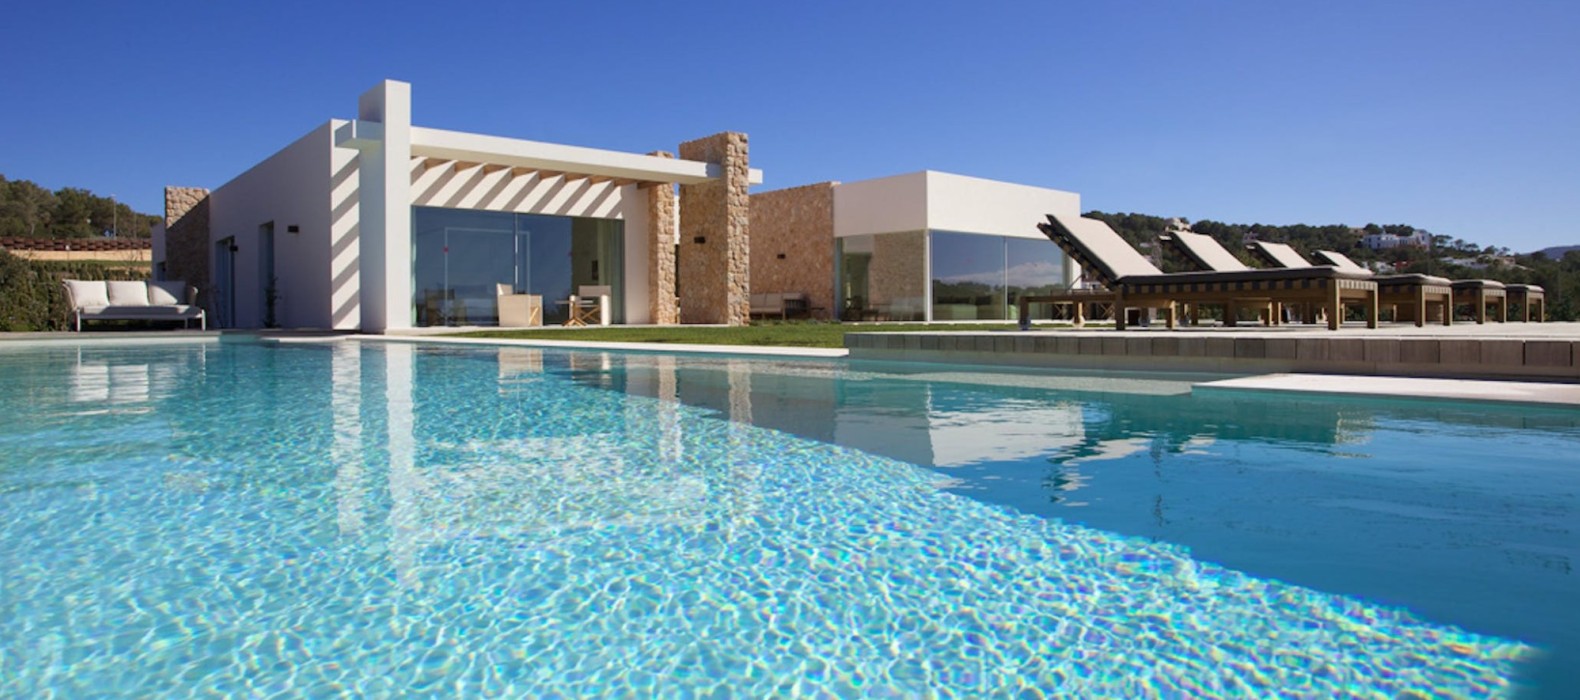 Exterior villa and pool view of Villa Cienna in Ibiza